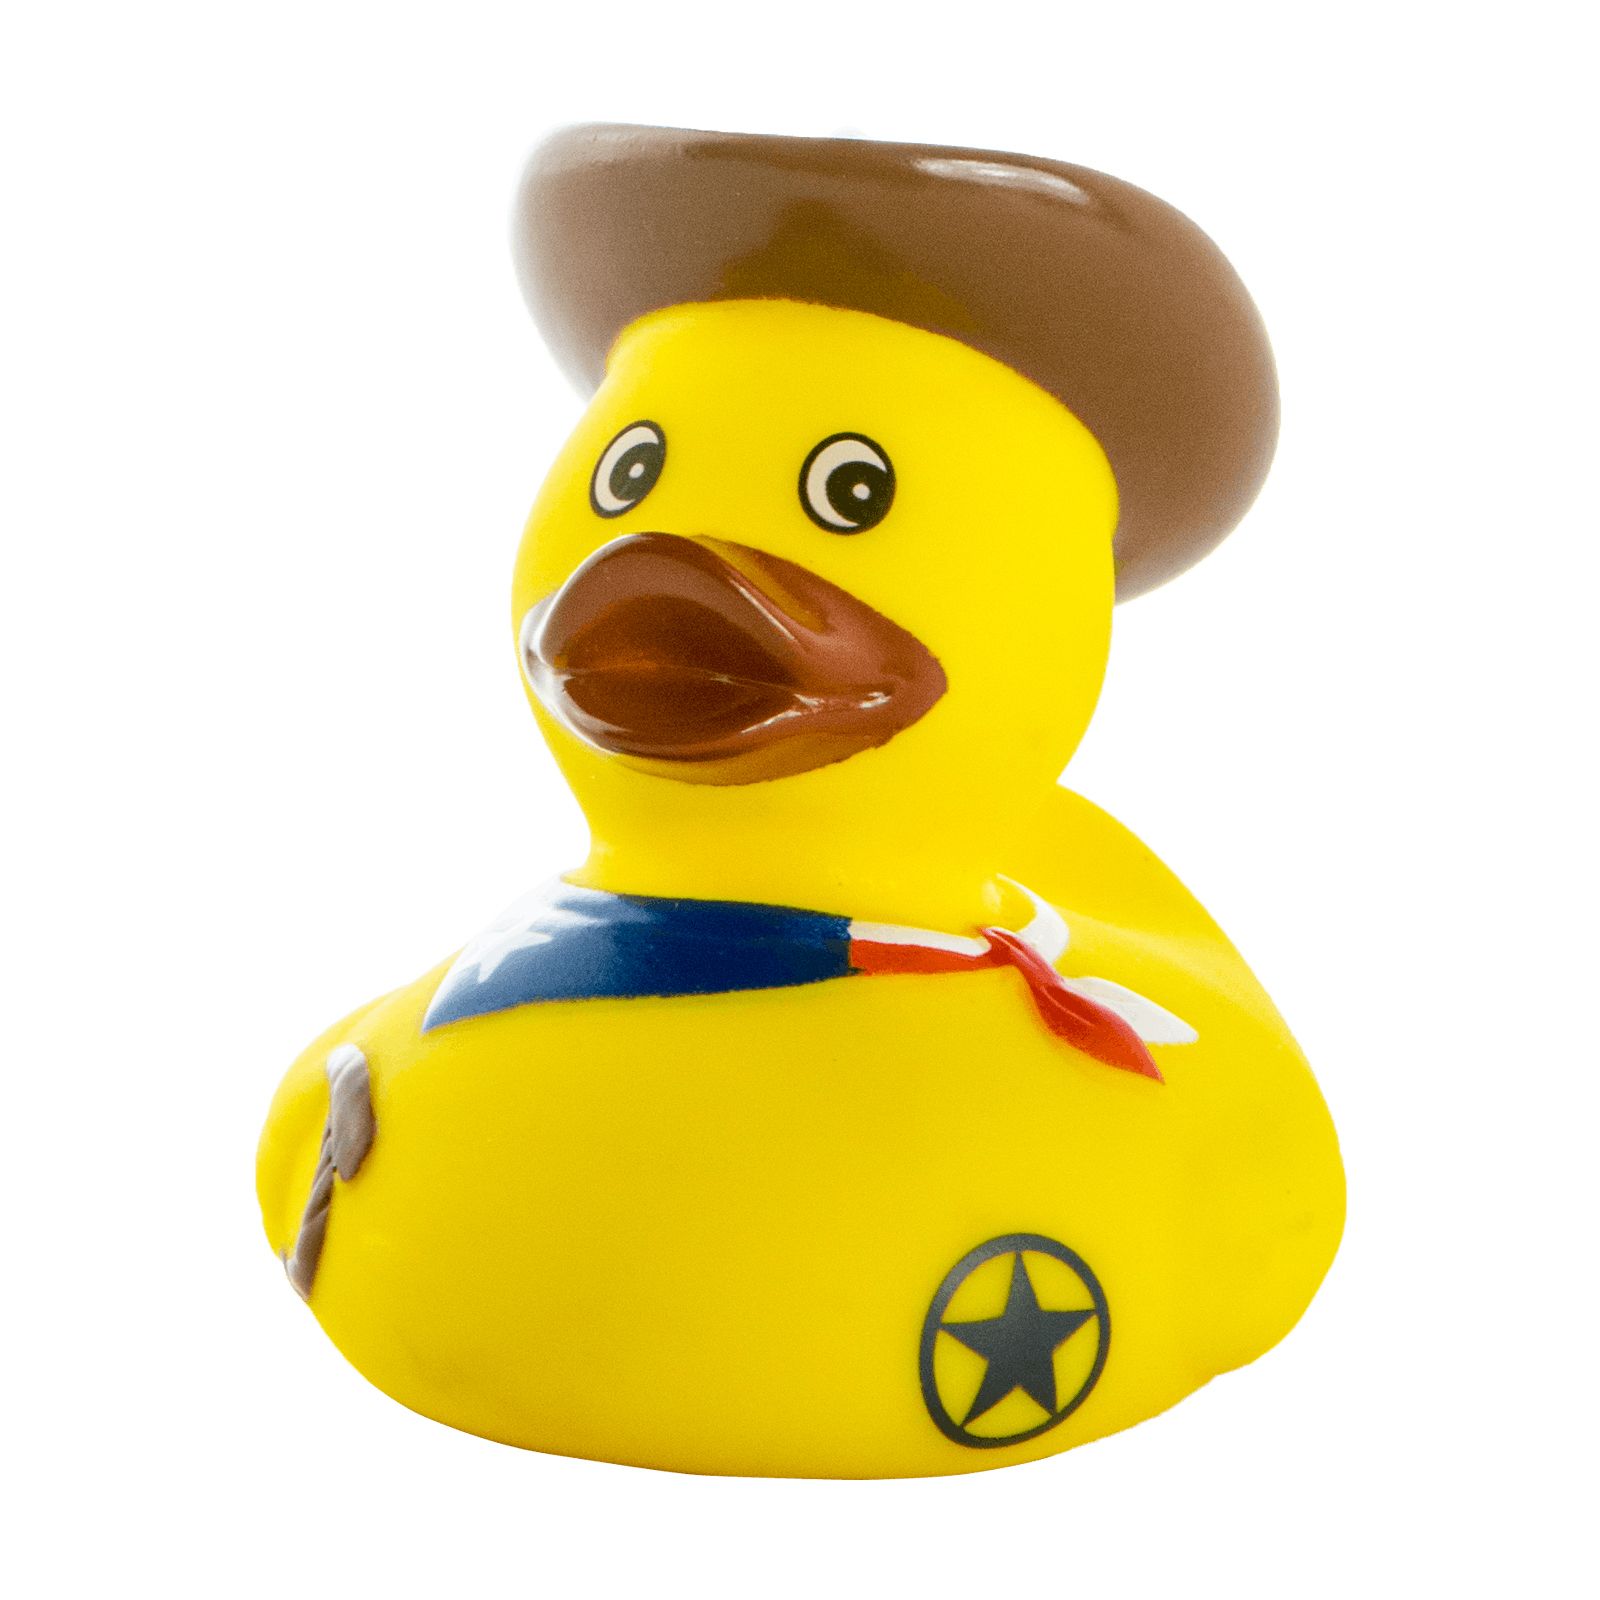 Cowboy Rubber Duck